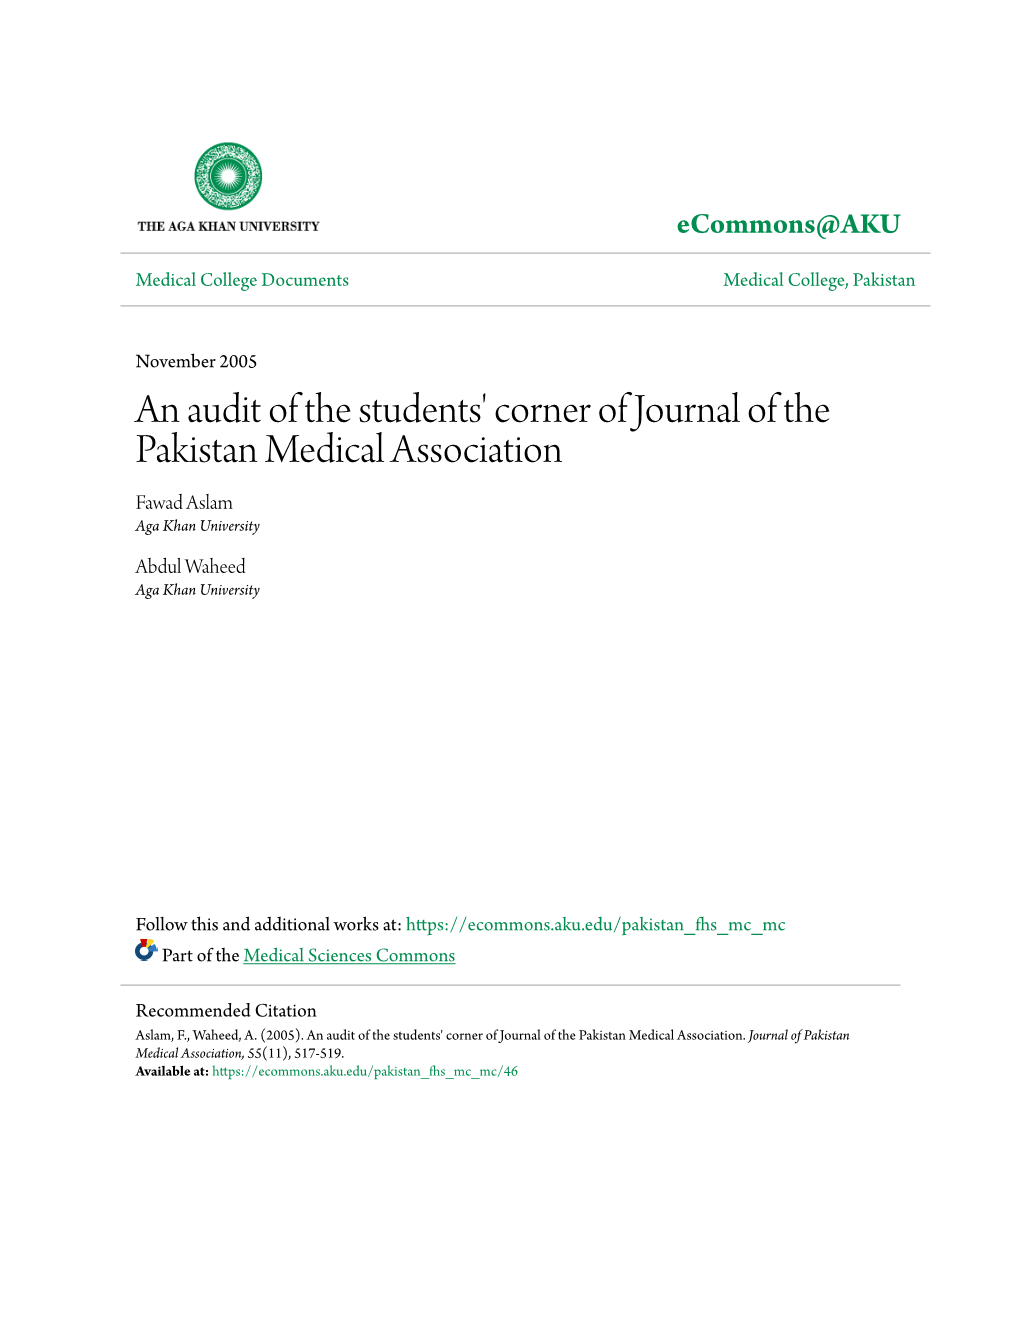 An Audit of the Students' Corner of Journal of the Pakistan Medical Association Fawad Aslam Aga Khan University